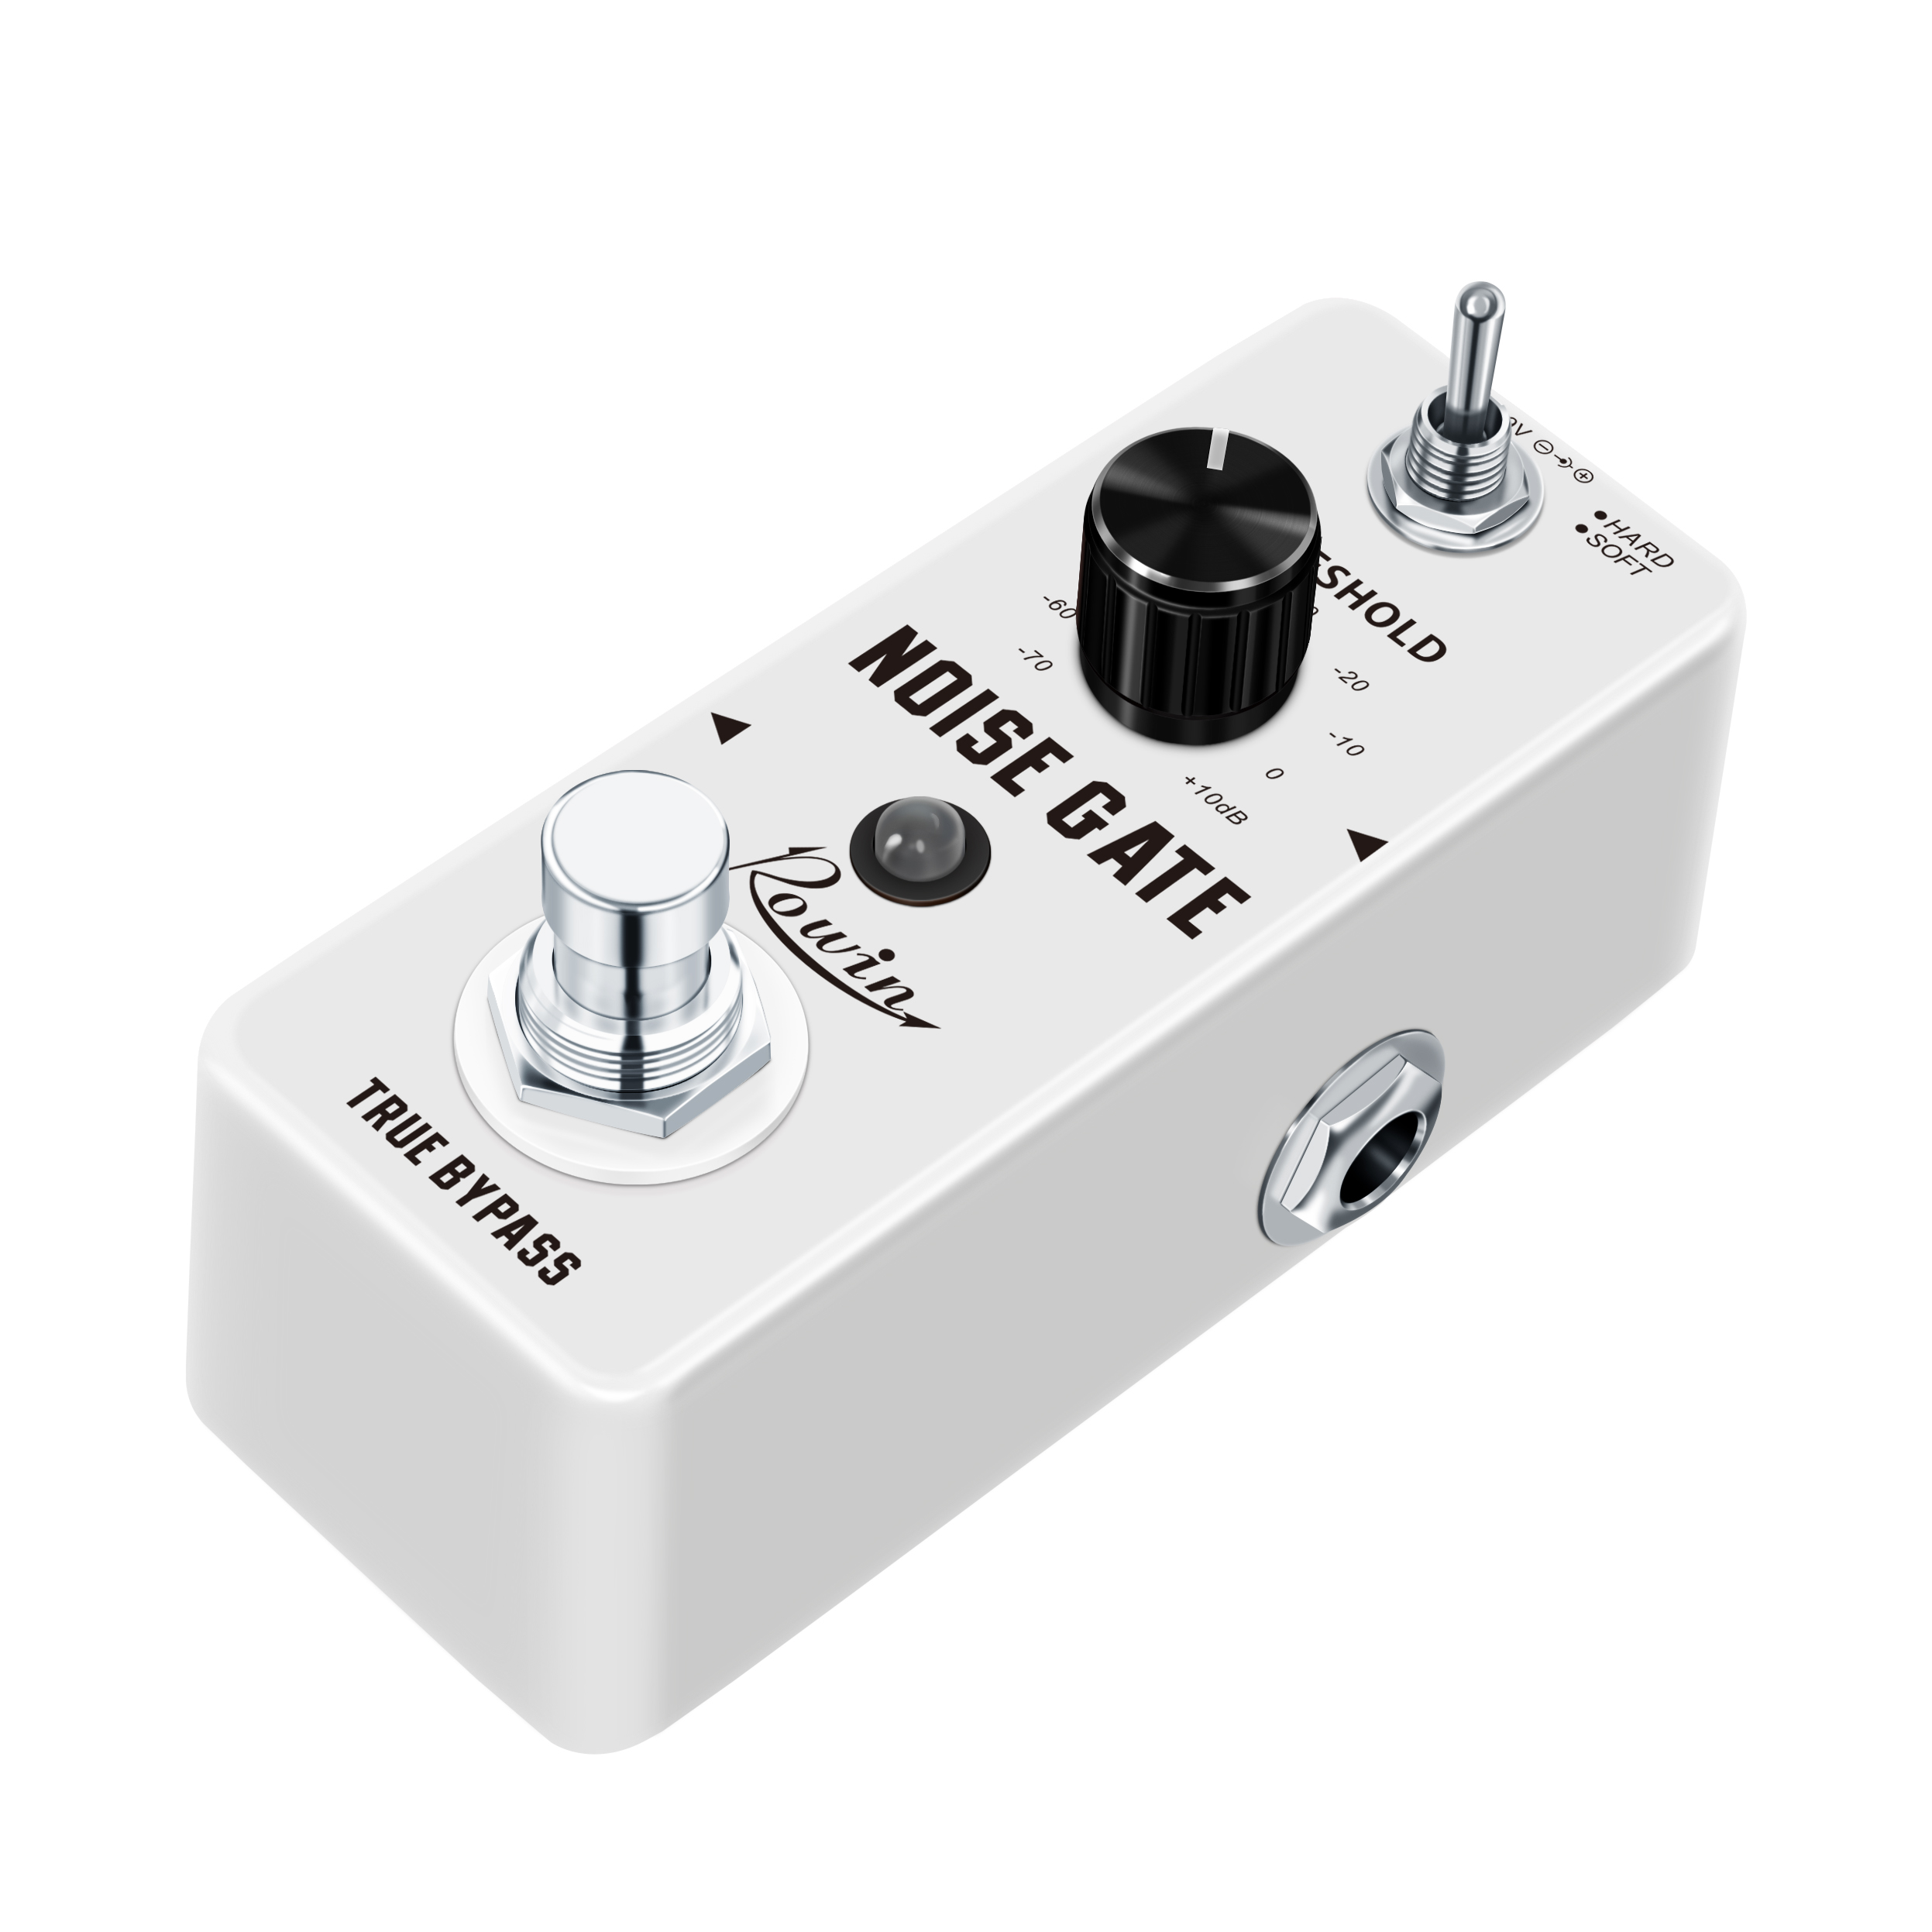 Rowin noise killer guitar noise gate suppressor effect pedal 2 modes